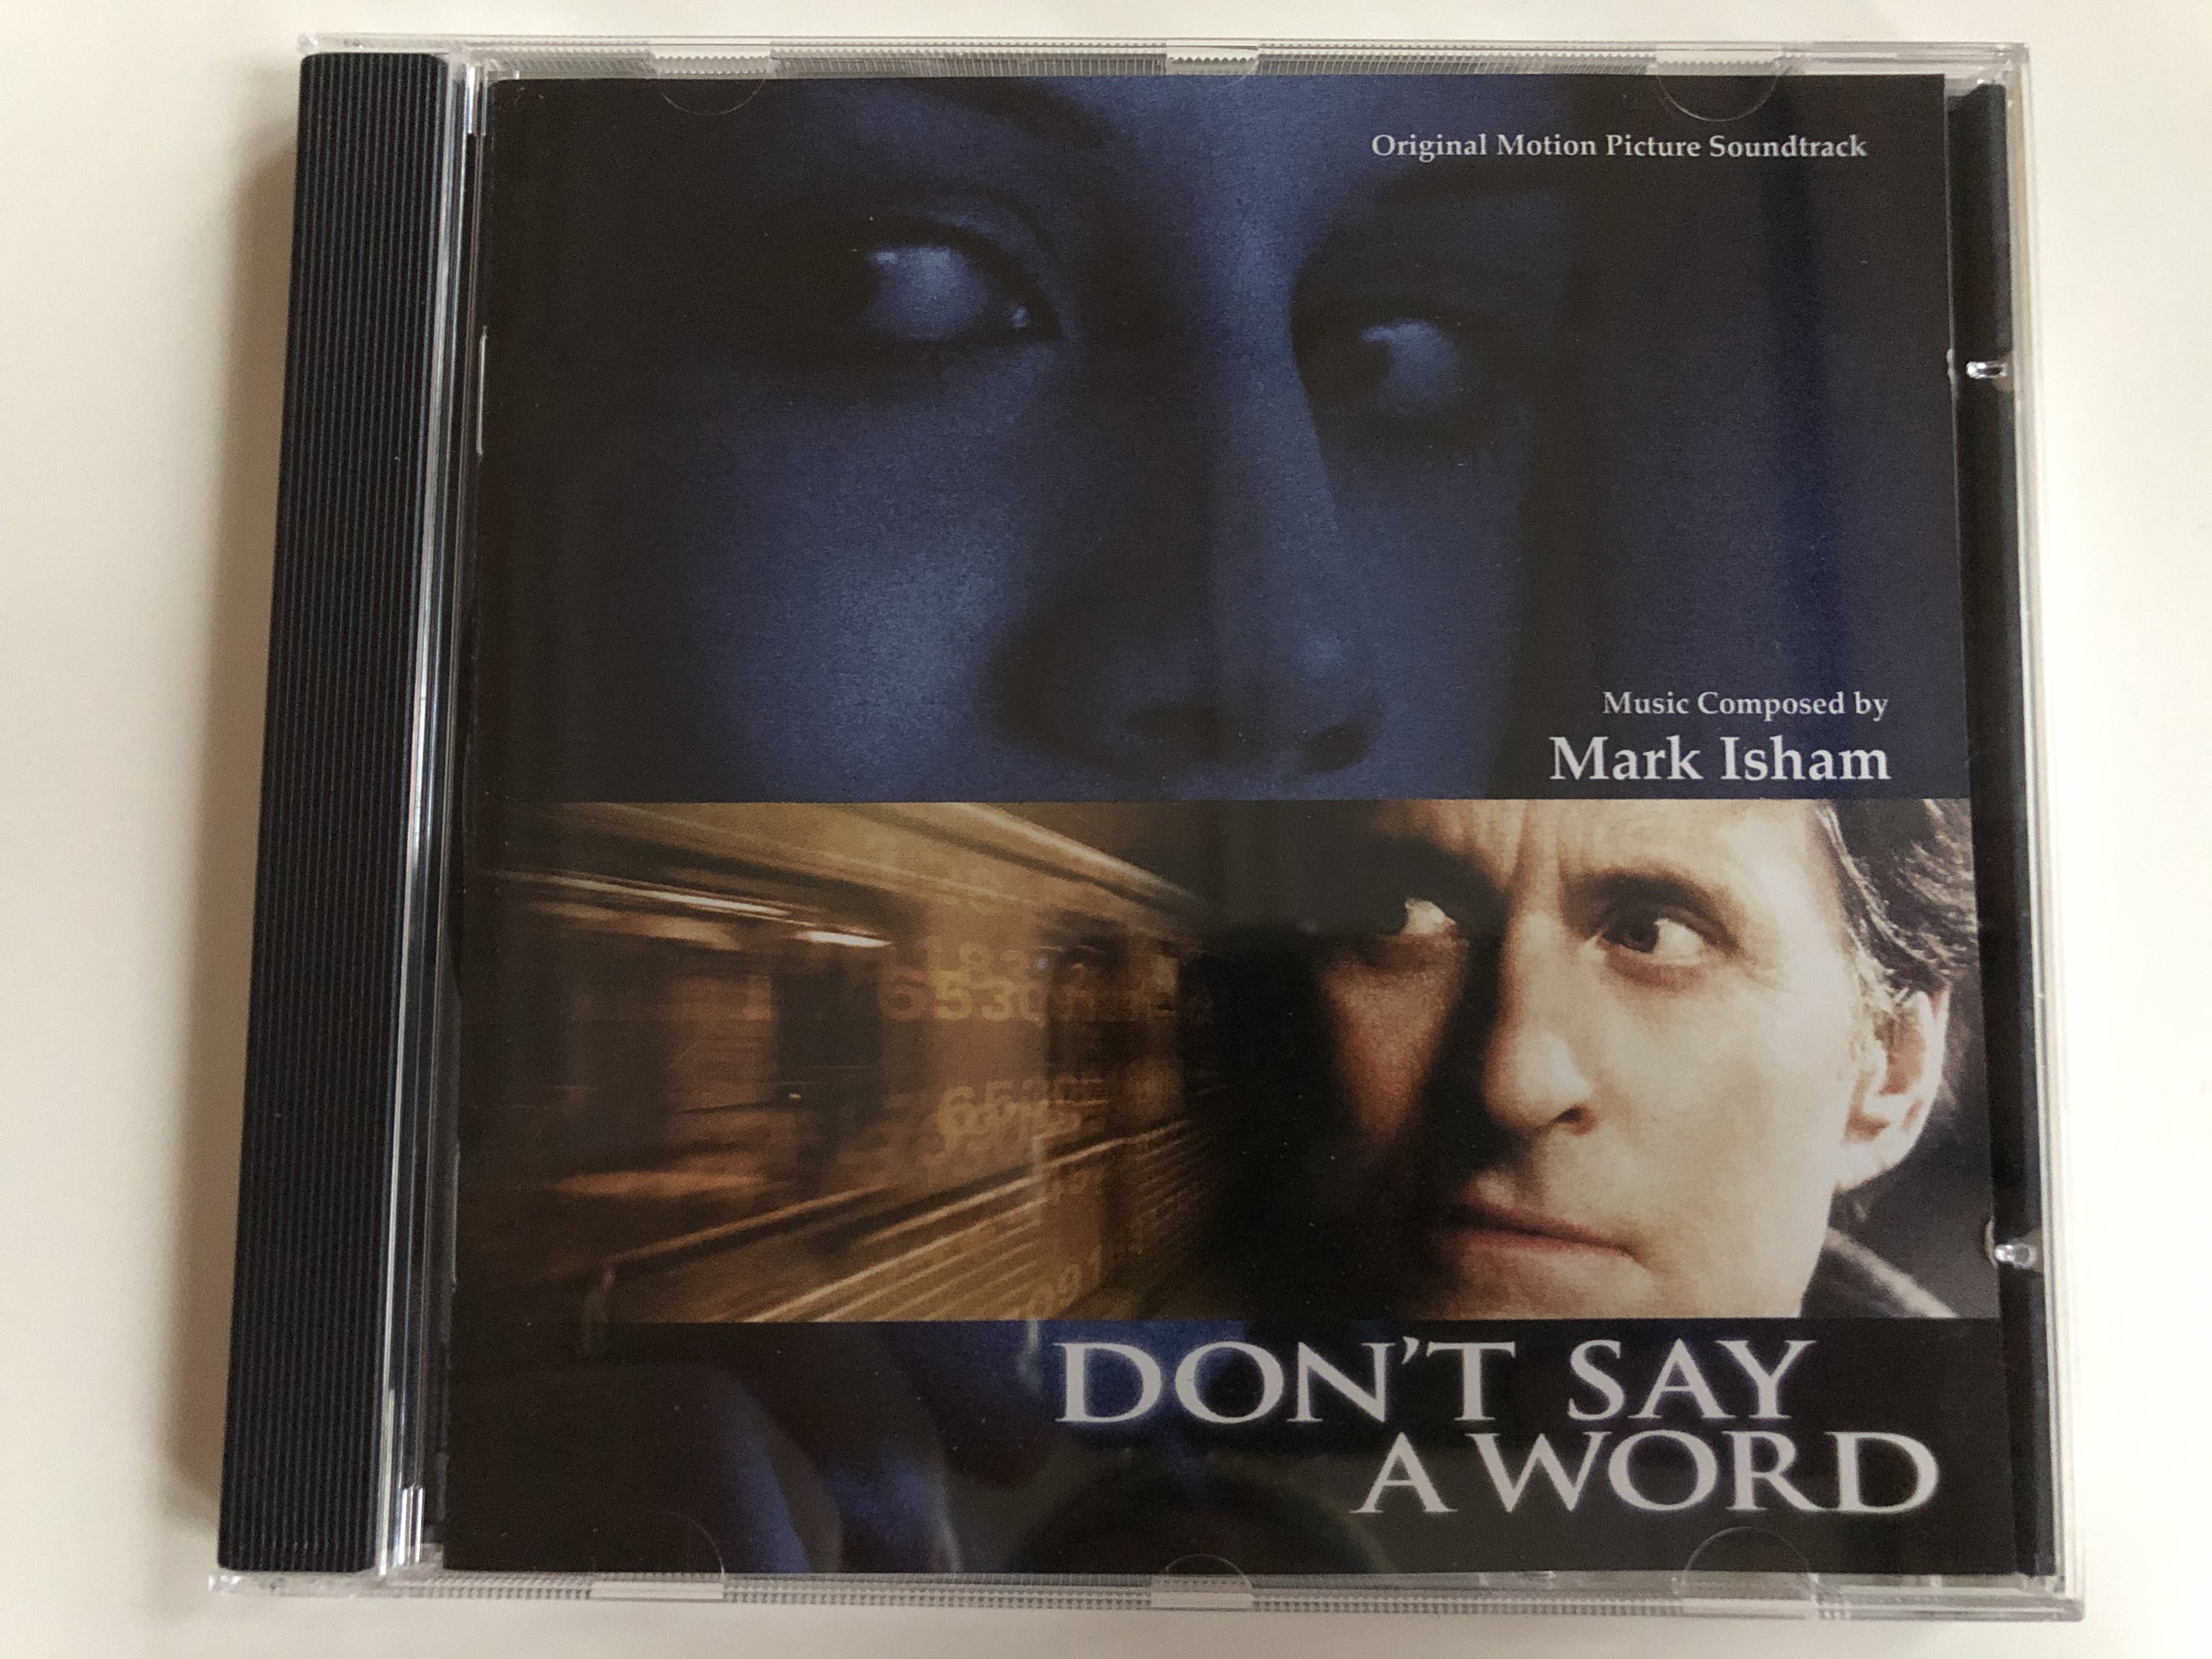 original-motion-picture-soundtrack-don-t-say-a-word-music-composed-by-mark-isham-var-se-sarabande-audio-cd-2001-vsd-6291-1-.jpg